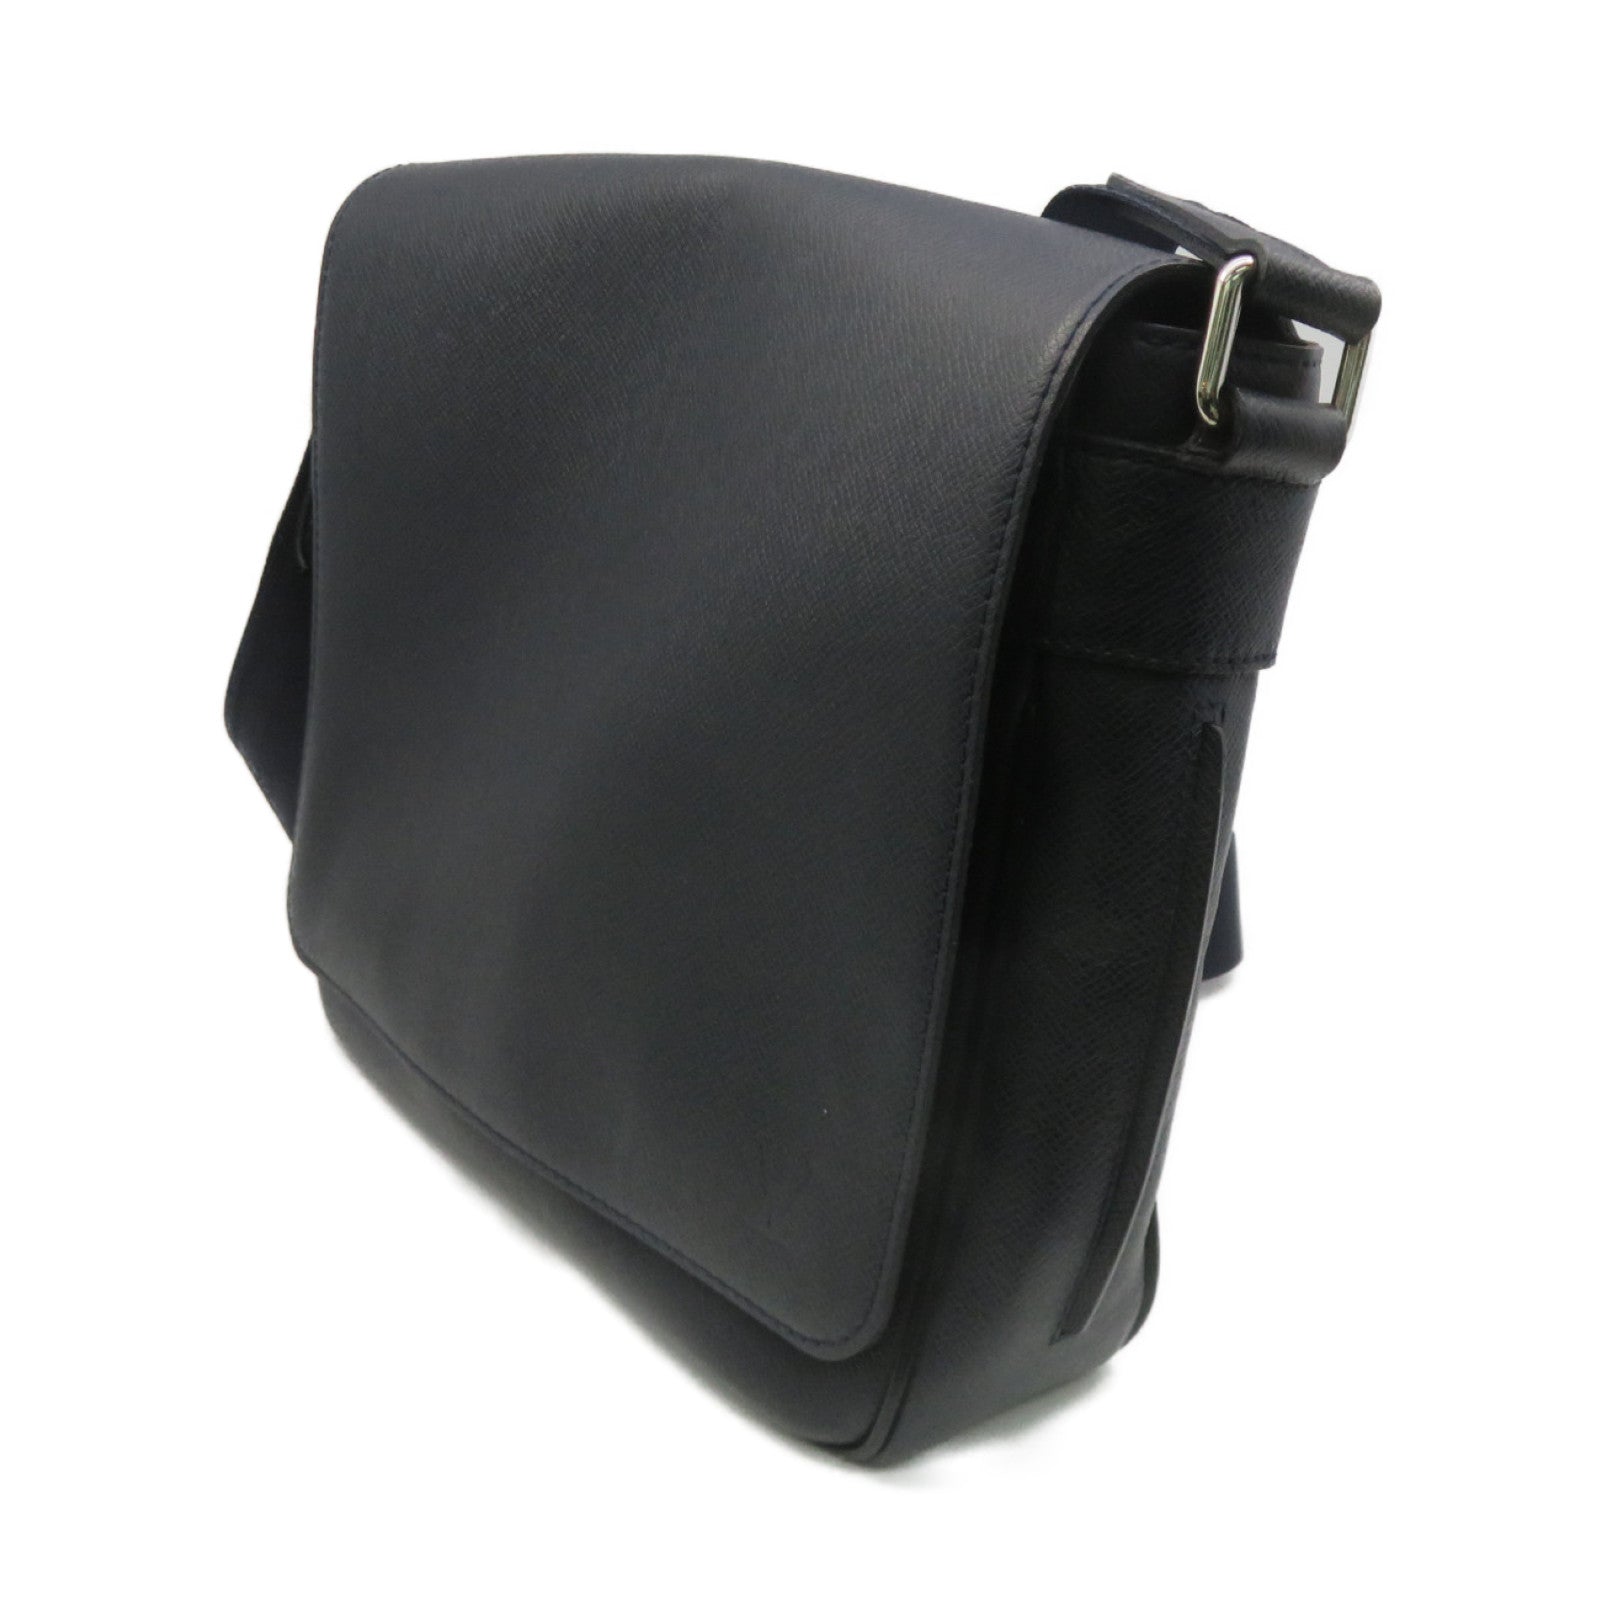 Louis Vuitton Roman PM M32699 Taiga Bag for Men. Brand New